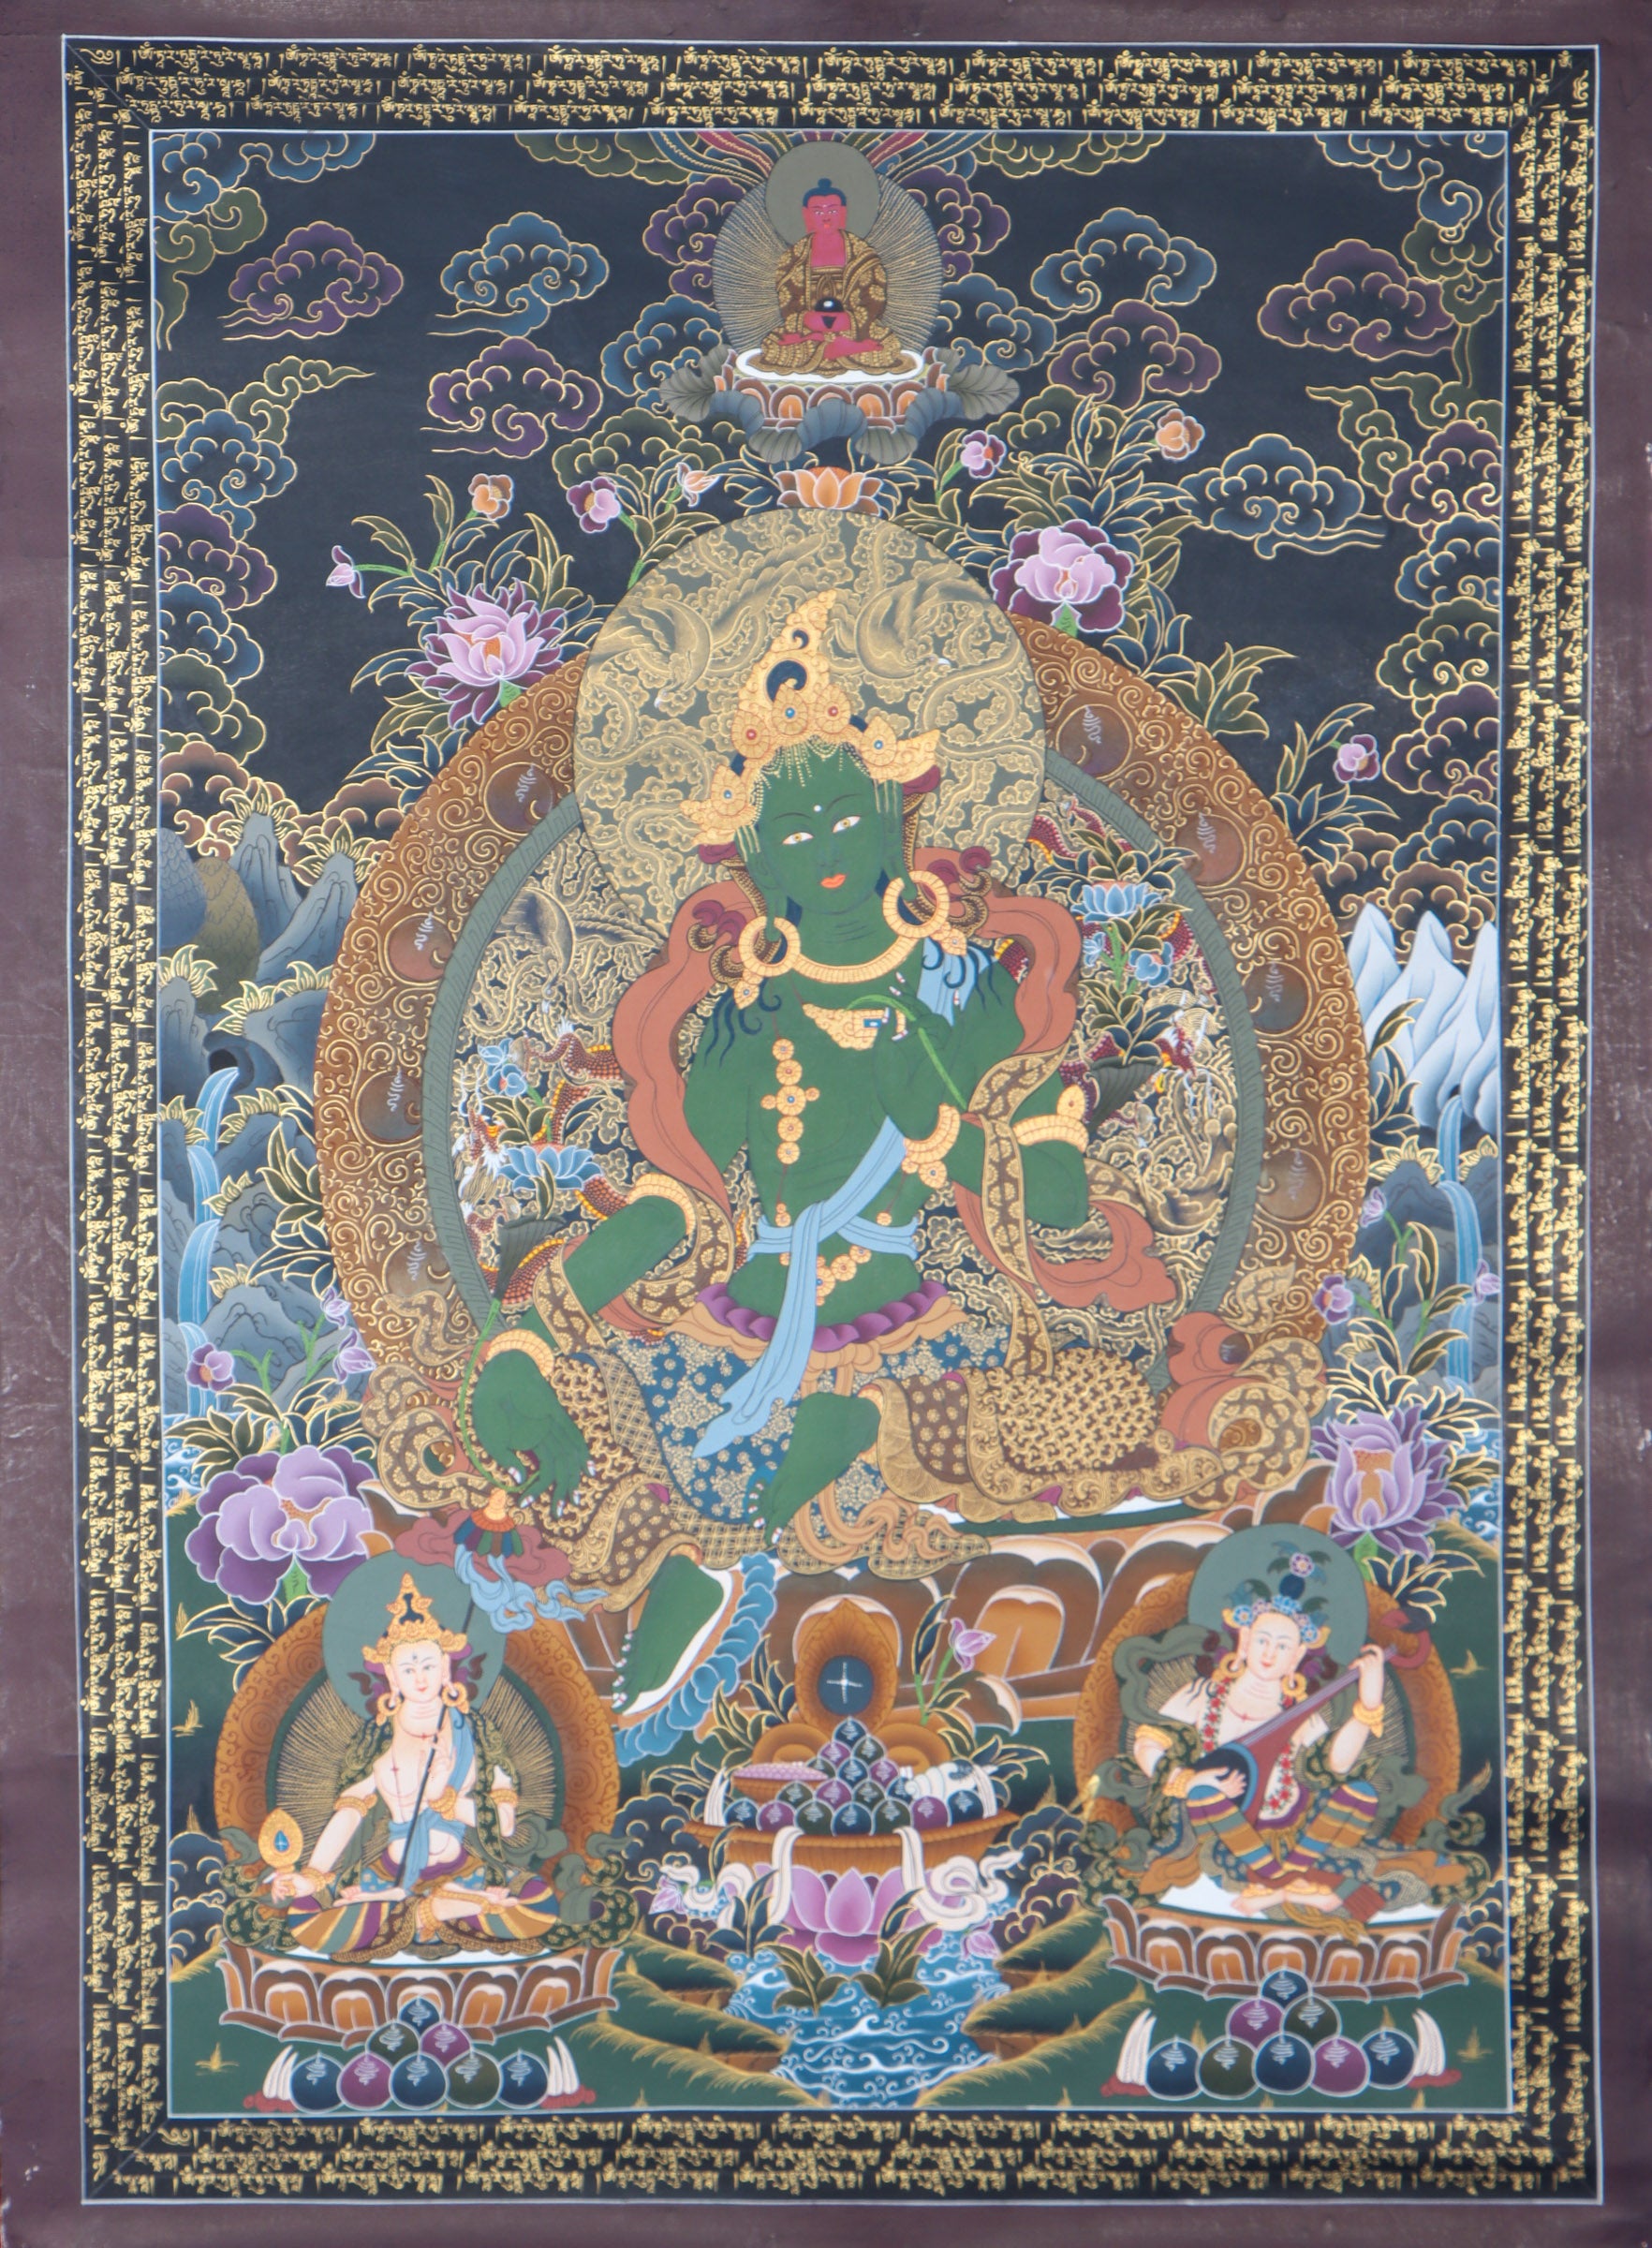  Green Tara Thangka for wisdom and enlightment.